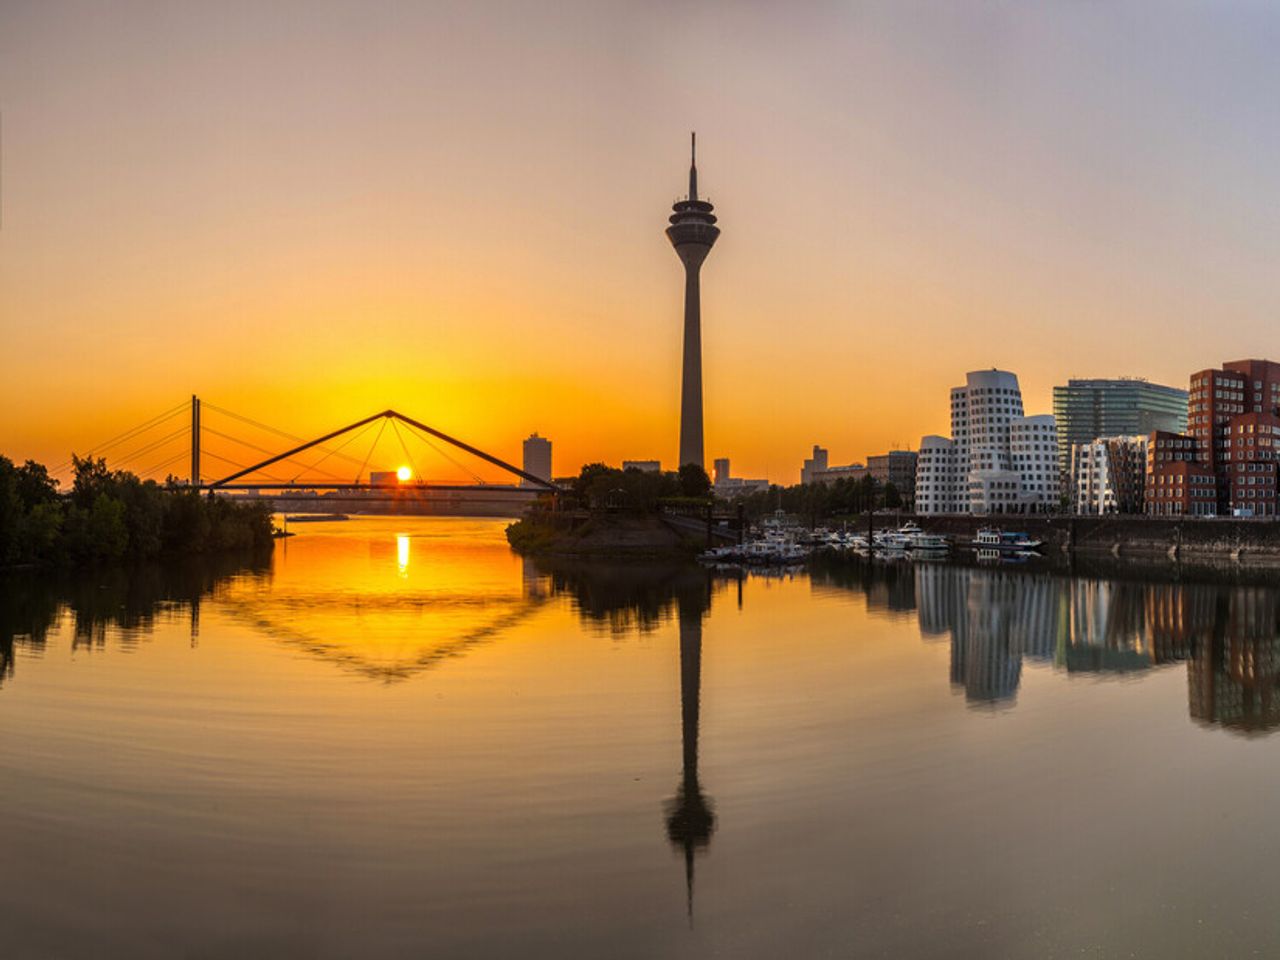 Explore the City - 4 Tage mit der Düsseldorf-Card